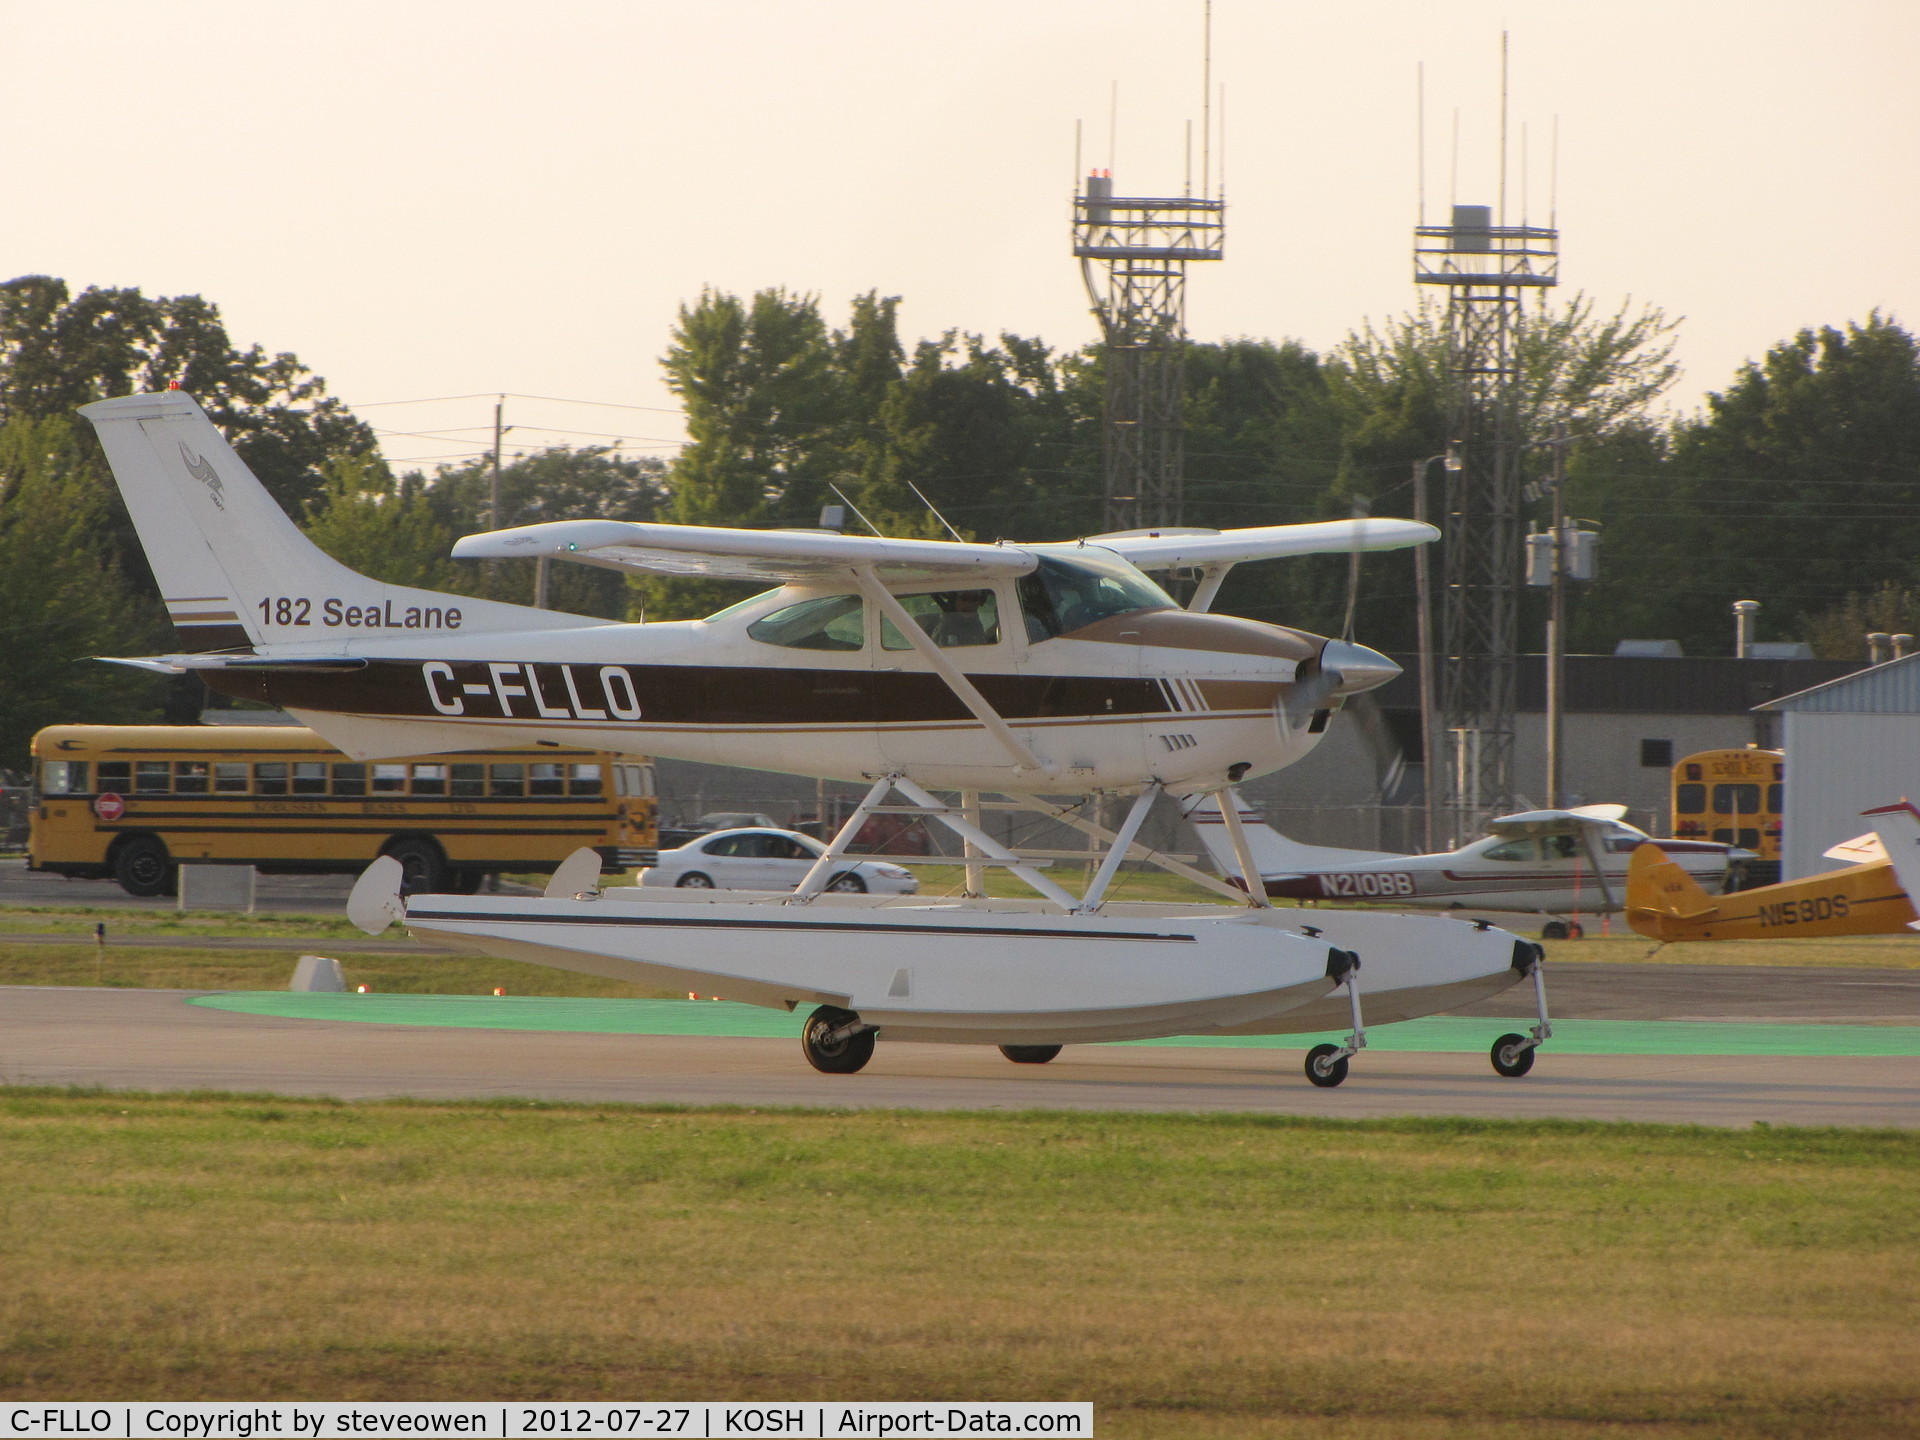 C-FLLO, 1973 Cessna 182P Skylane C/N 18262555, Cessna 182 Sealane landing at Oshkosh